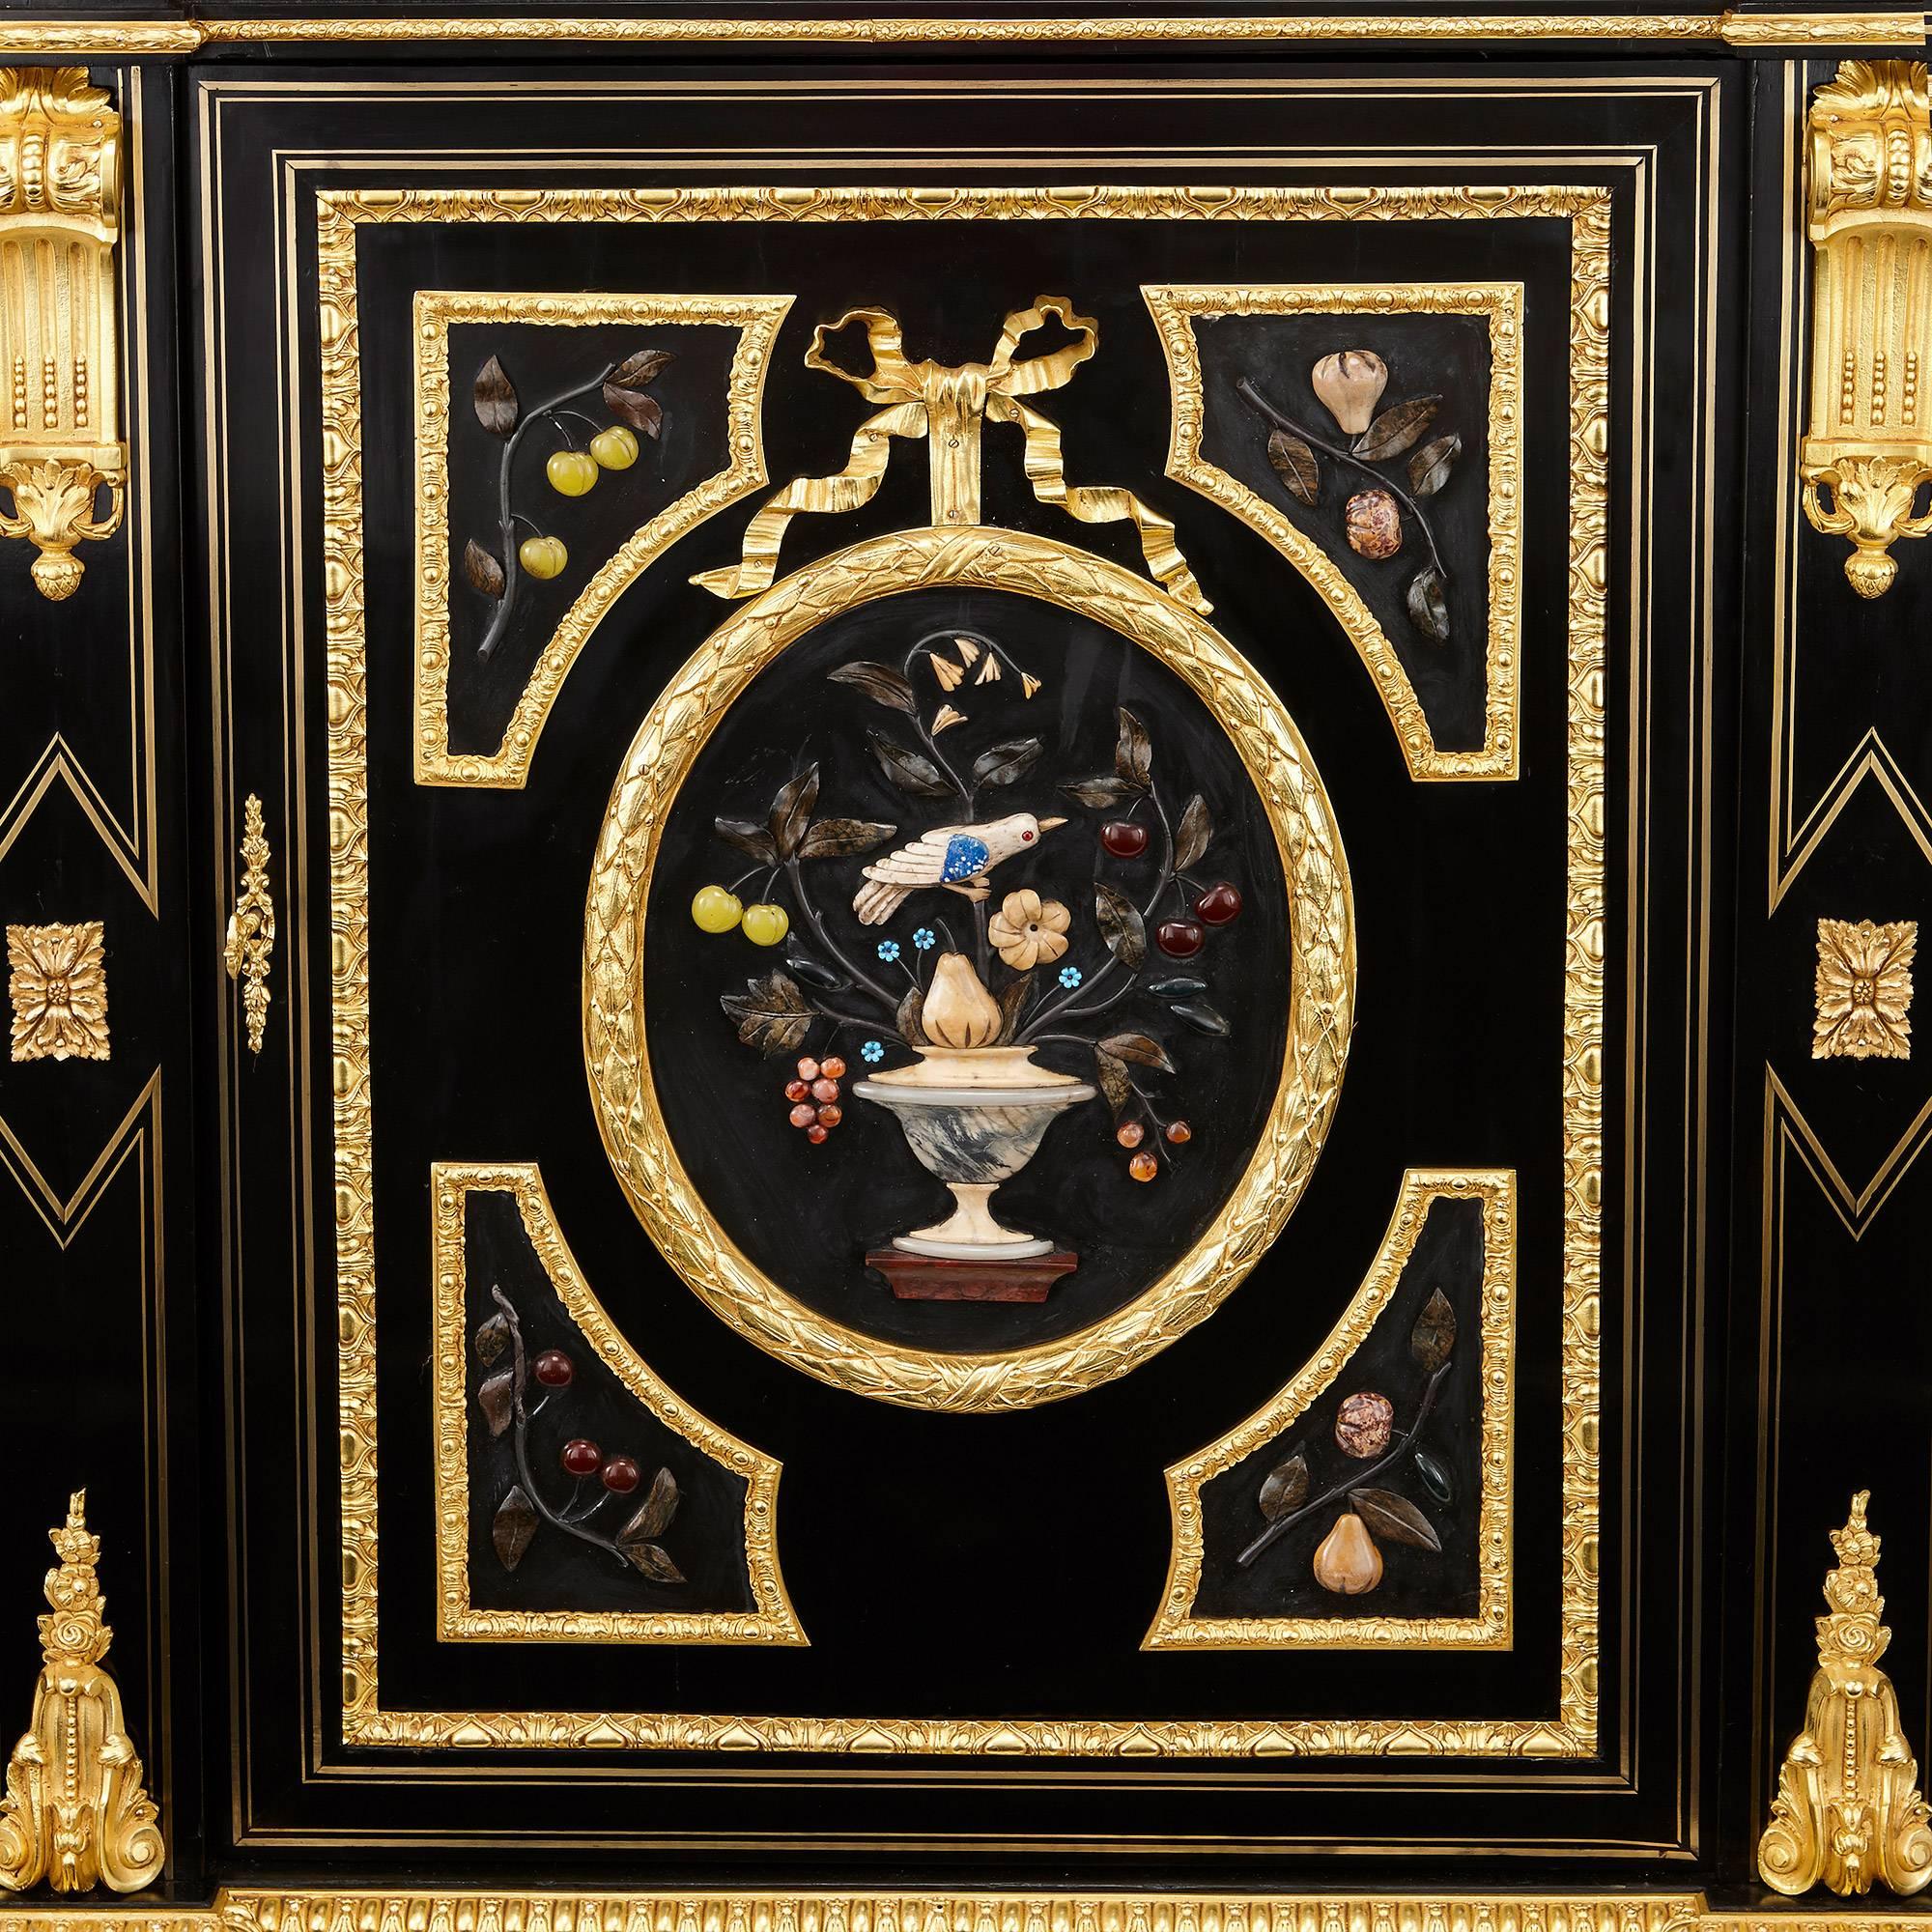 French Napoleon III Period Marble, Hardstone, Ebonized Wood and Ormolu-Mounted Cabinet